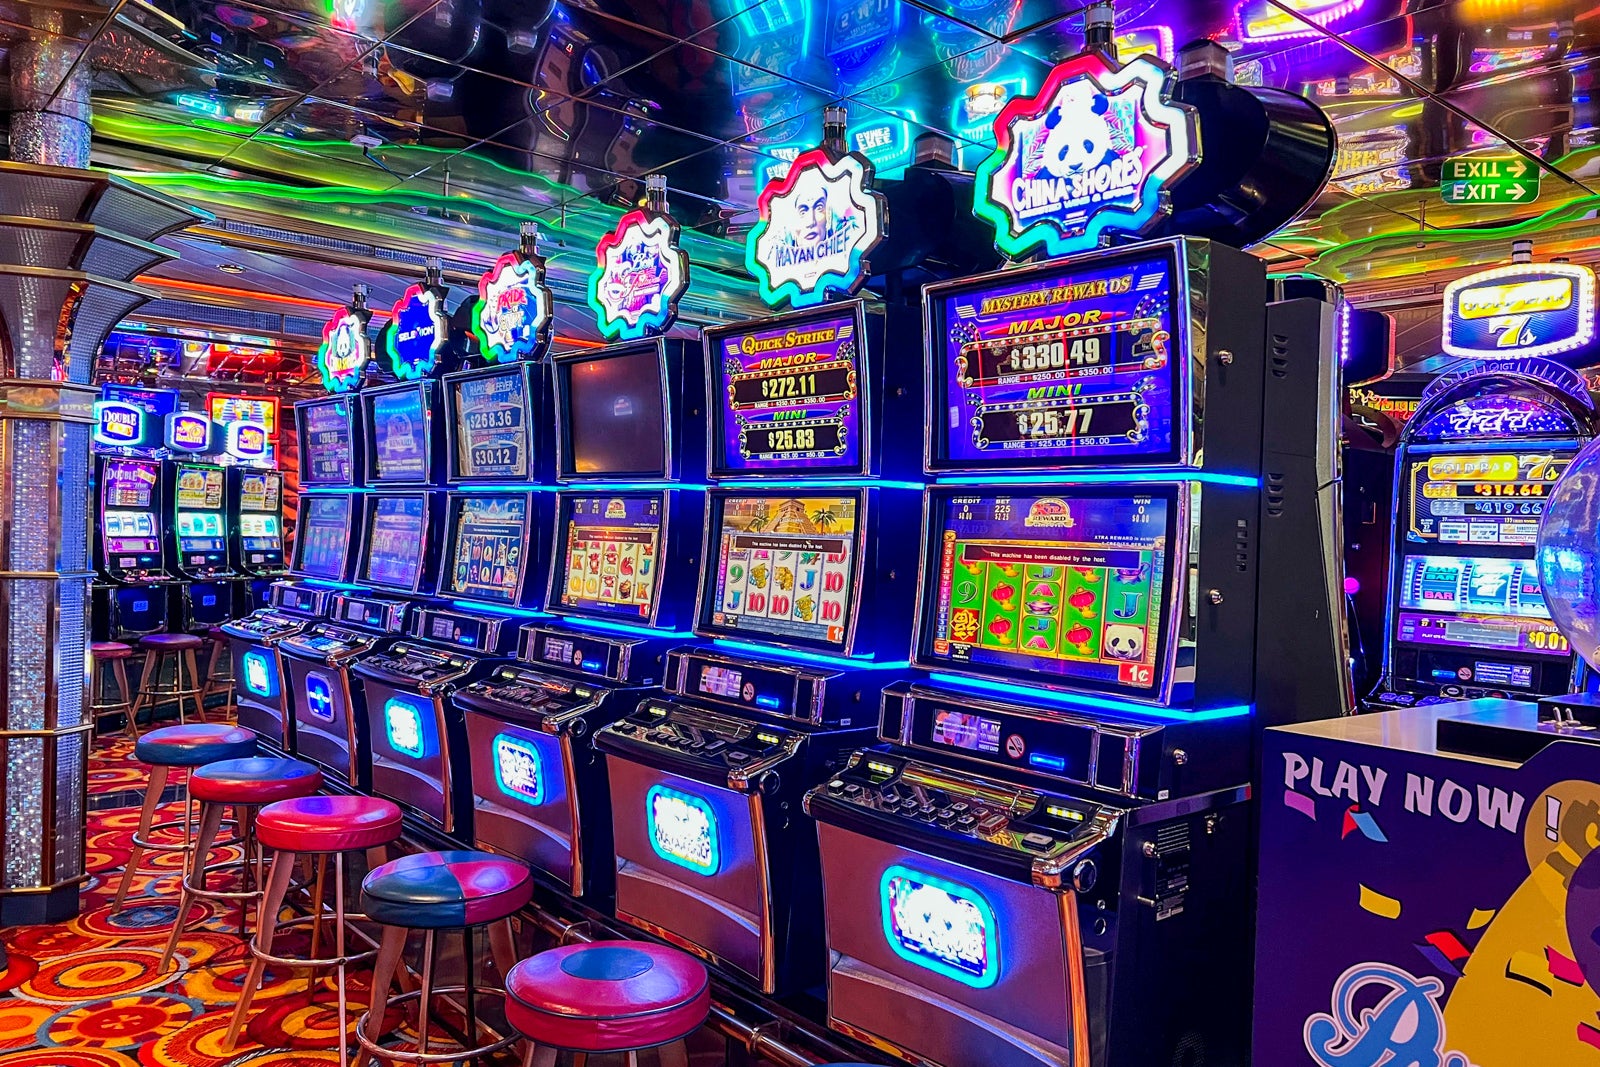 Slot machines on Grandeur of the Seas cruise ship casino.